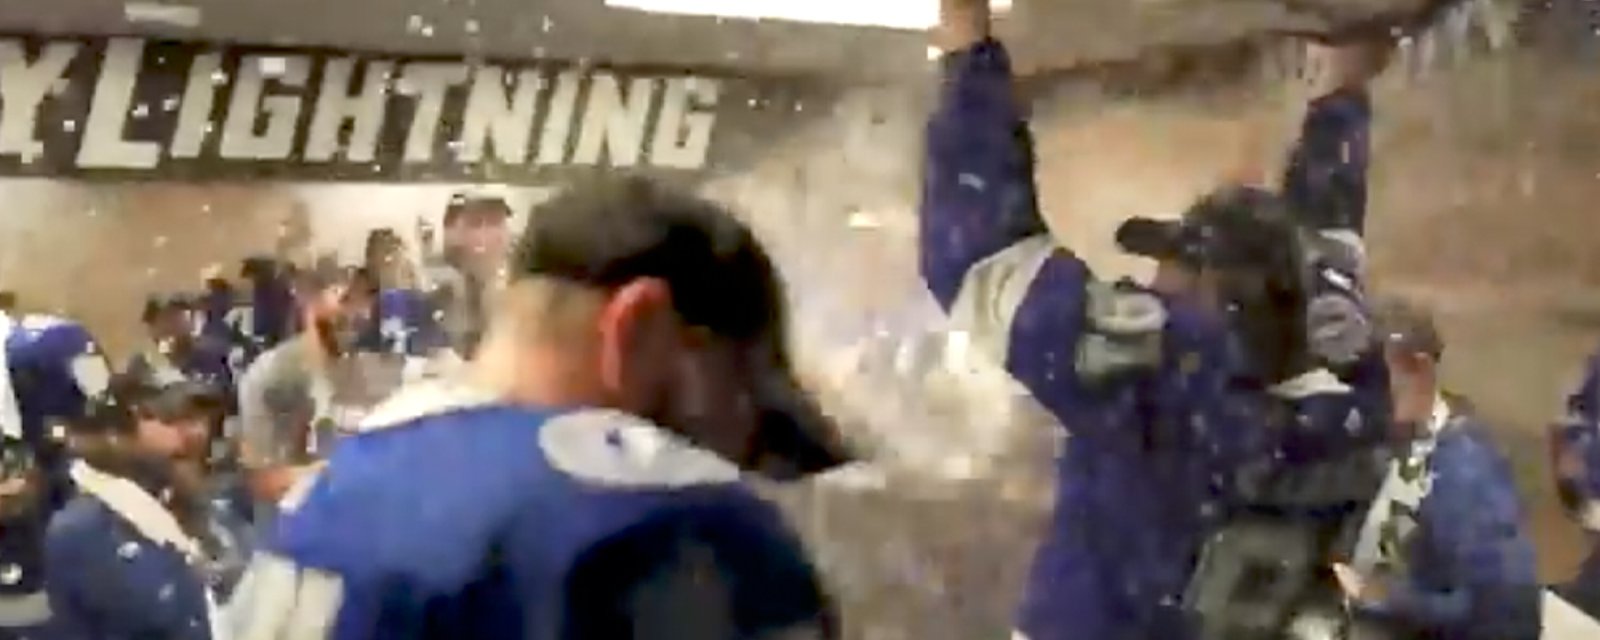 WATCH: Tampa Bay Lightning booze-fueled Stanley Cup celebration in locker room 